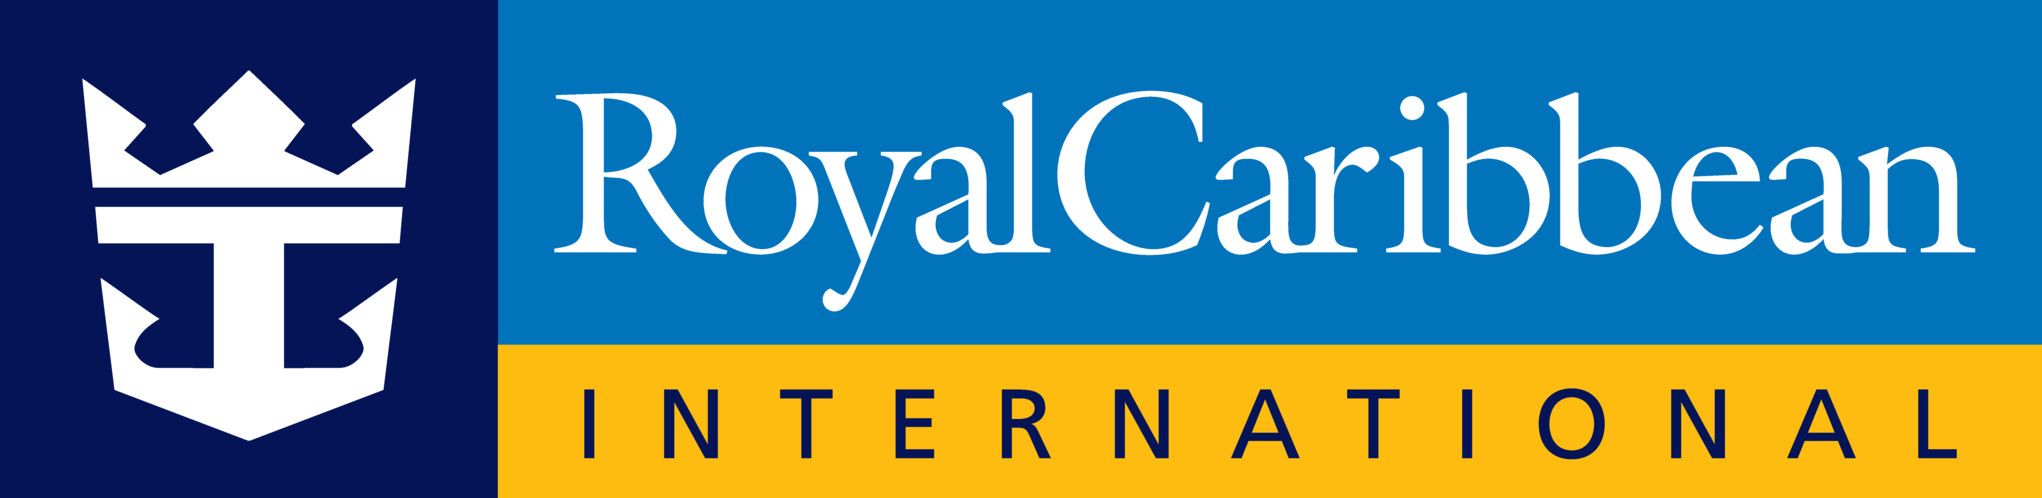 Royal Caribbean Entertainment